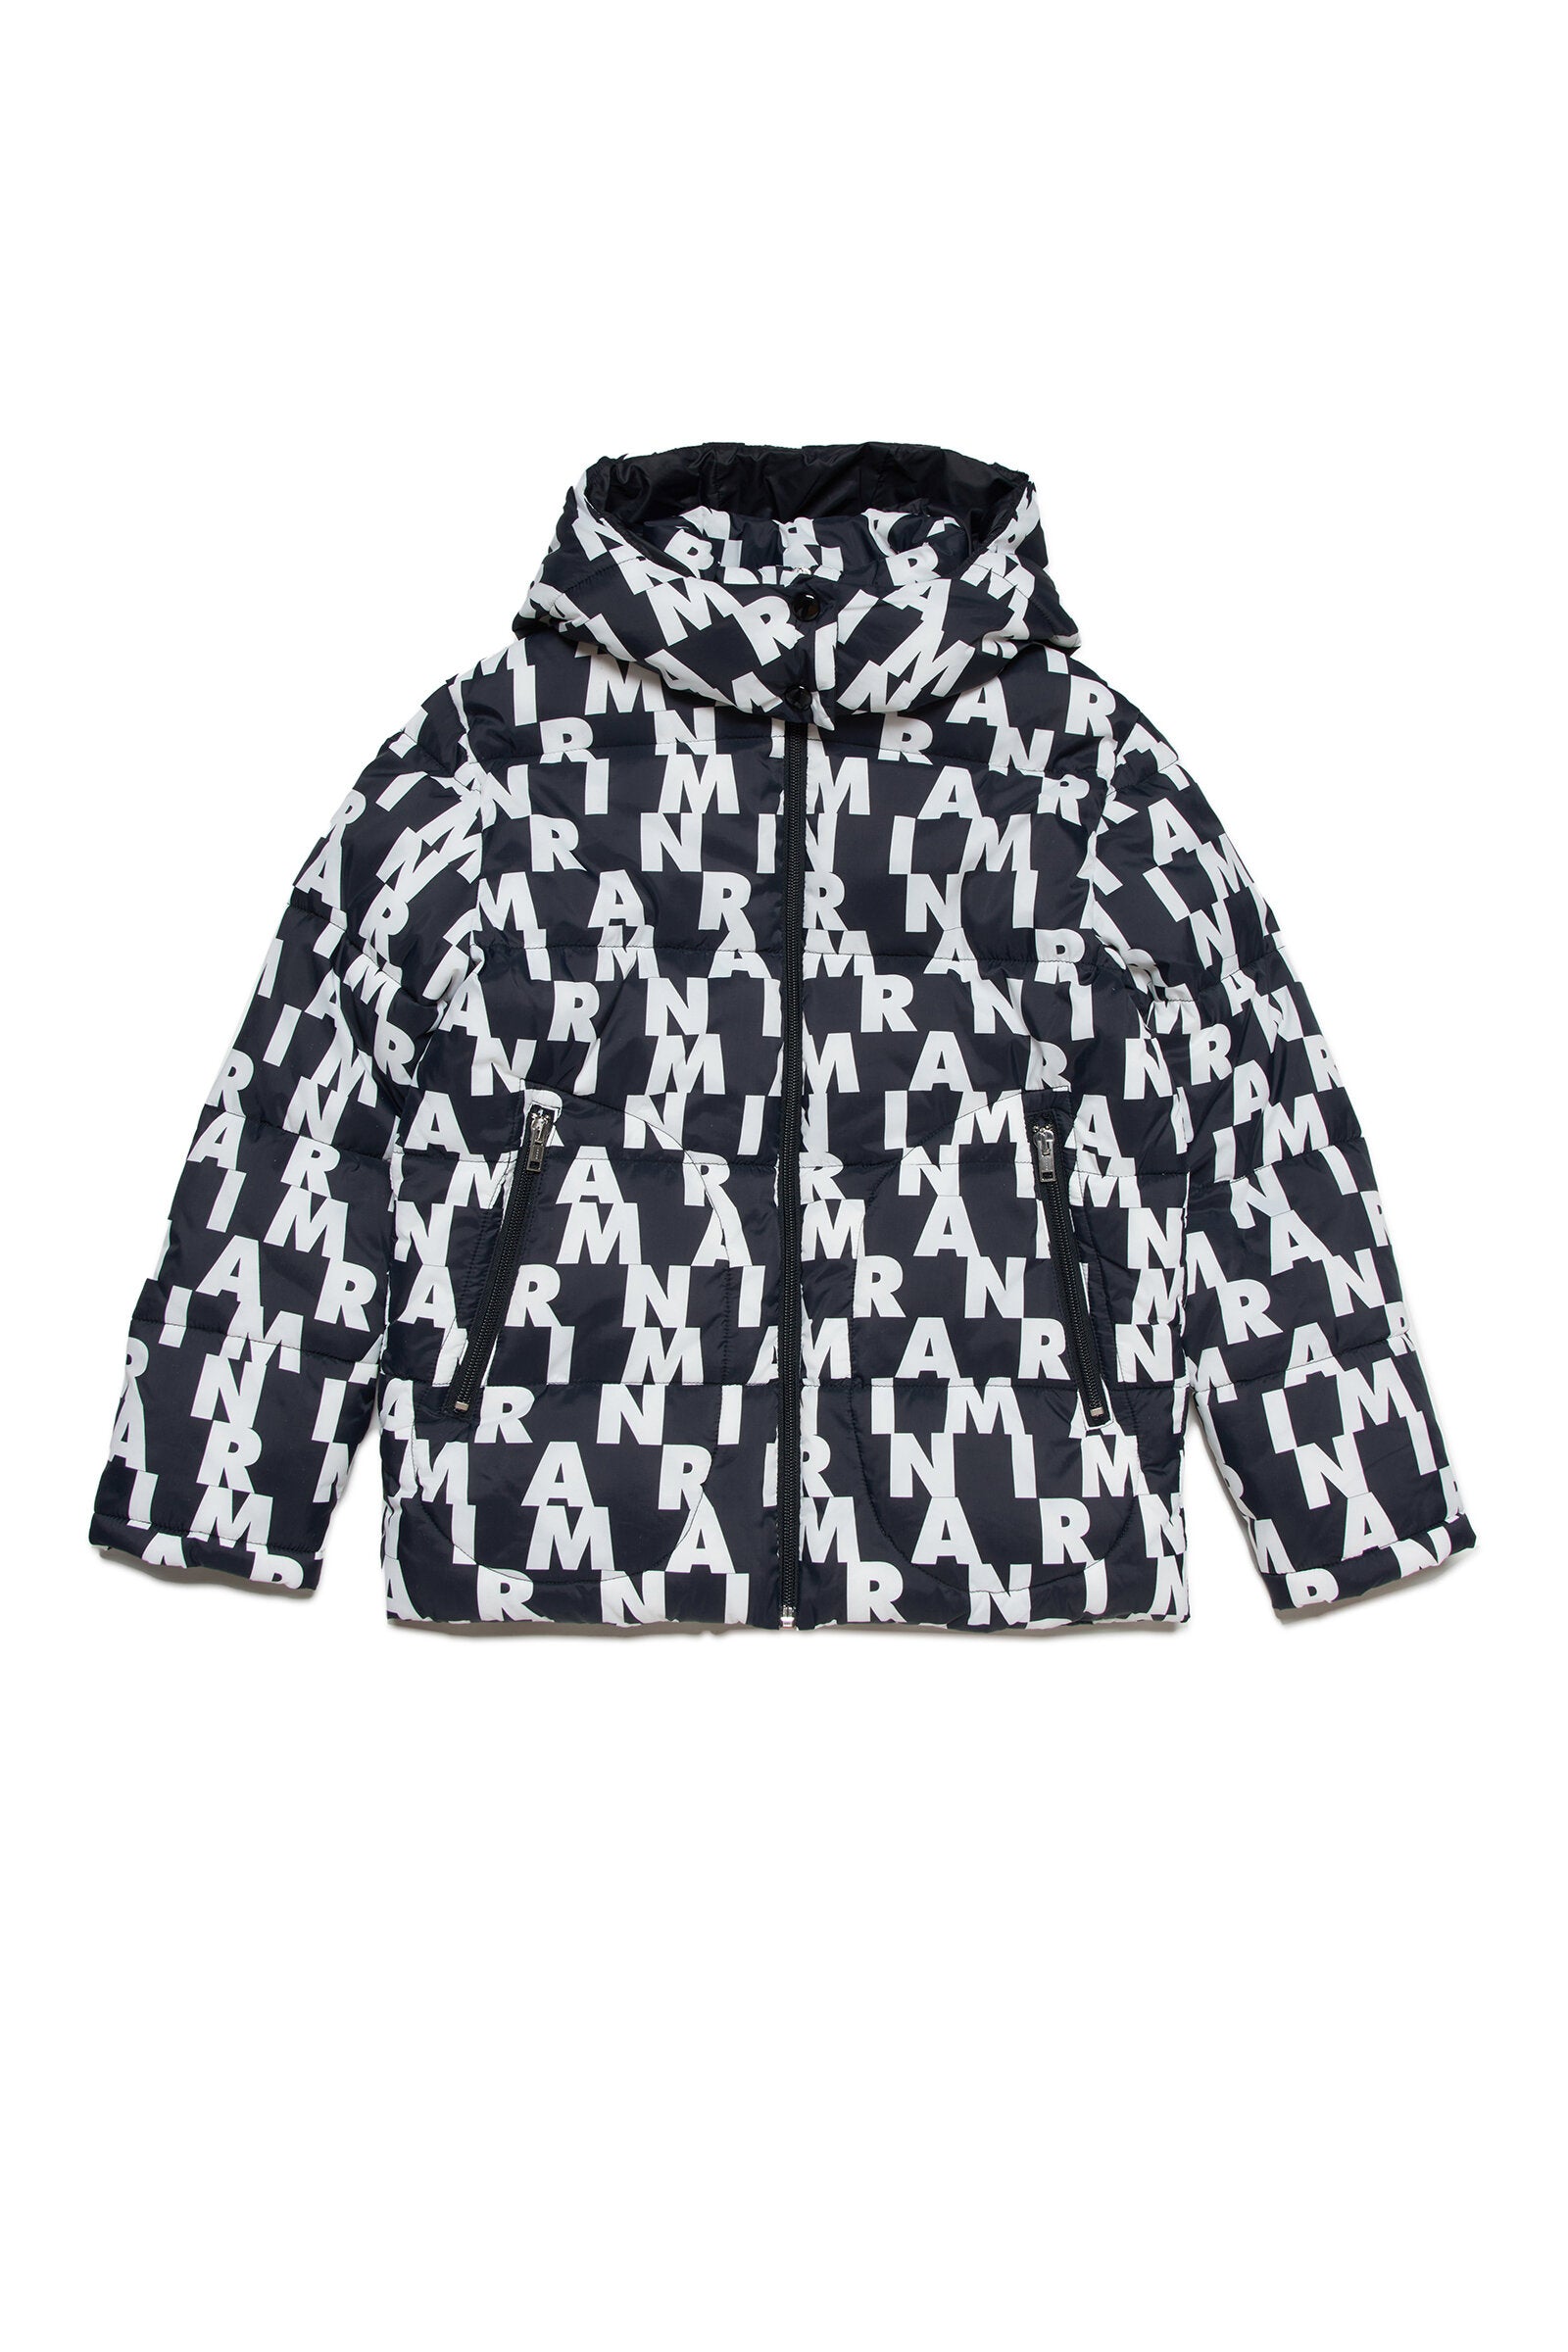 Marni allover pattern hooded padded jacket